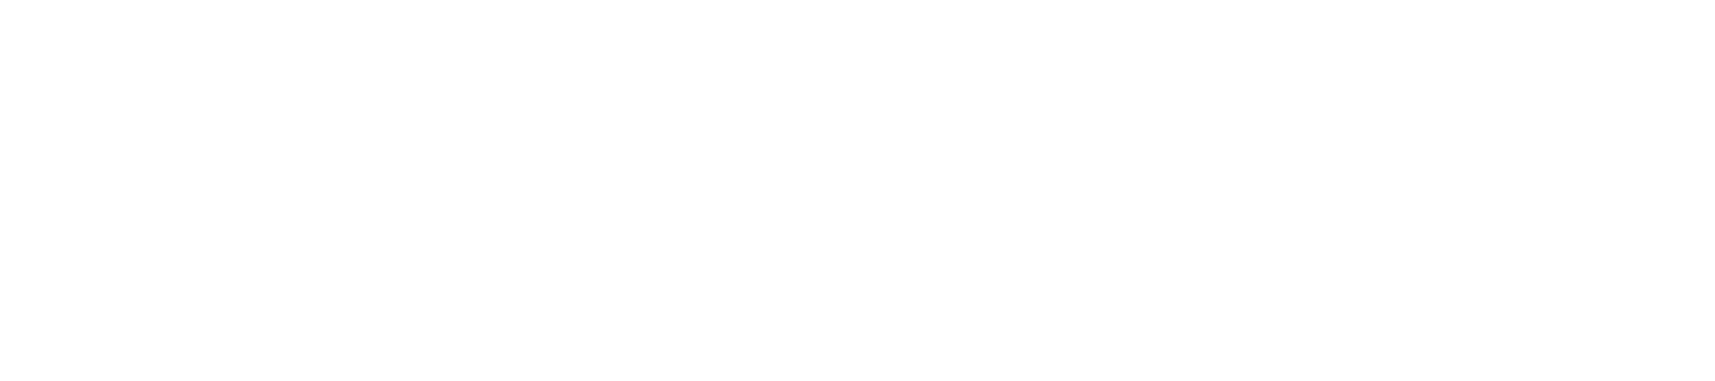 techtics-design-thinking-logo